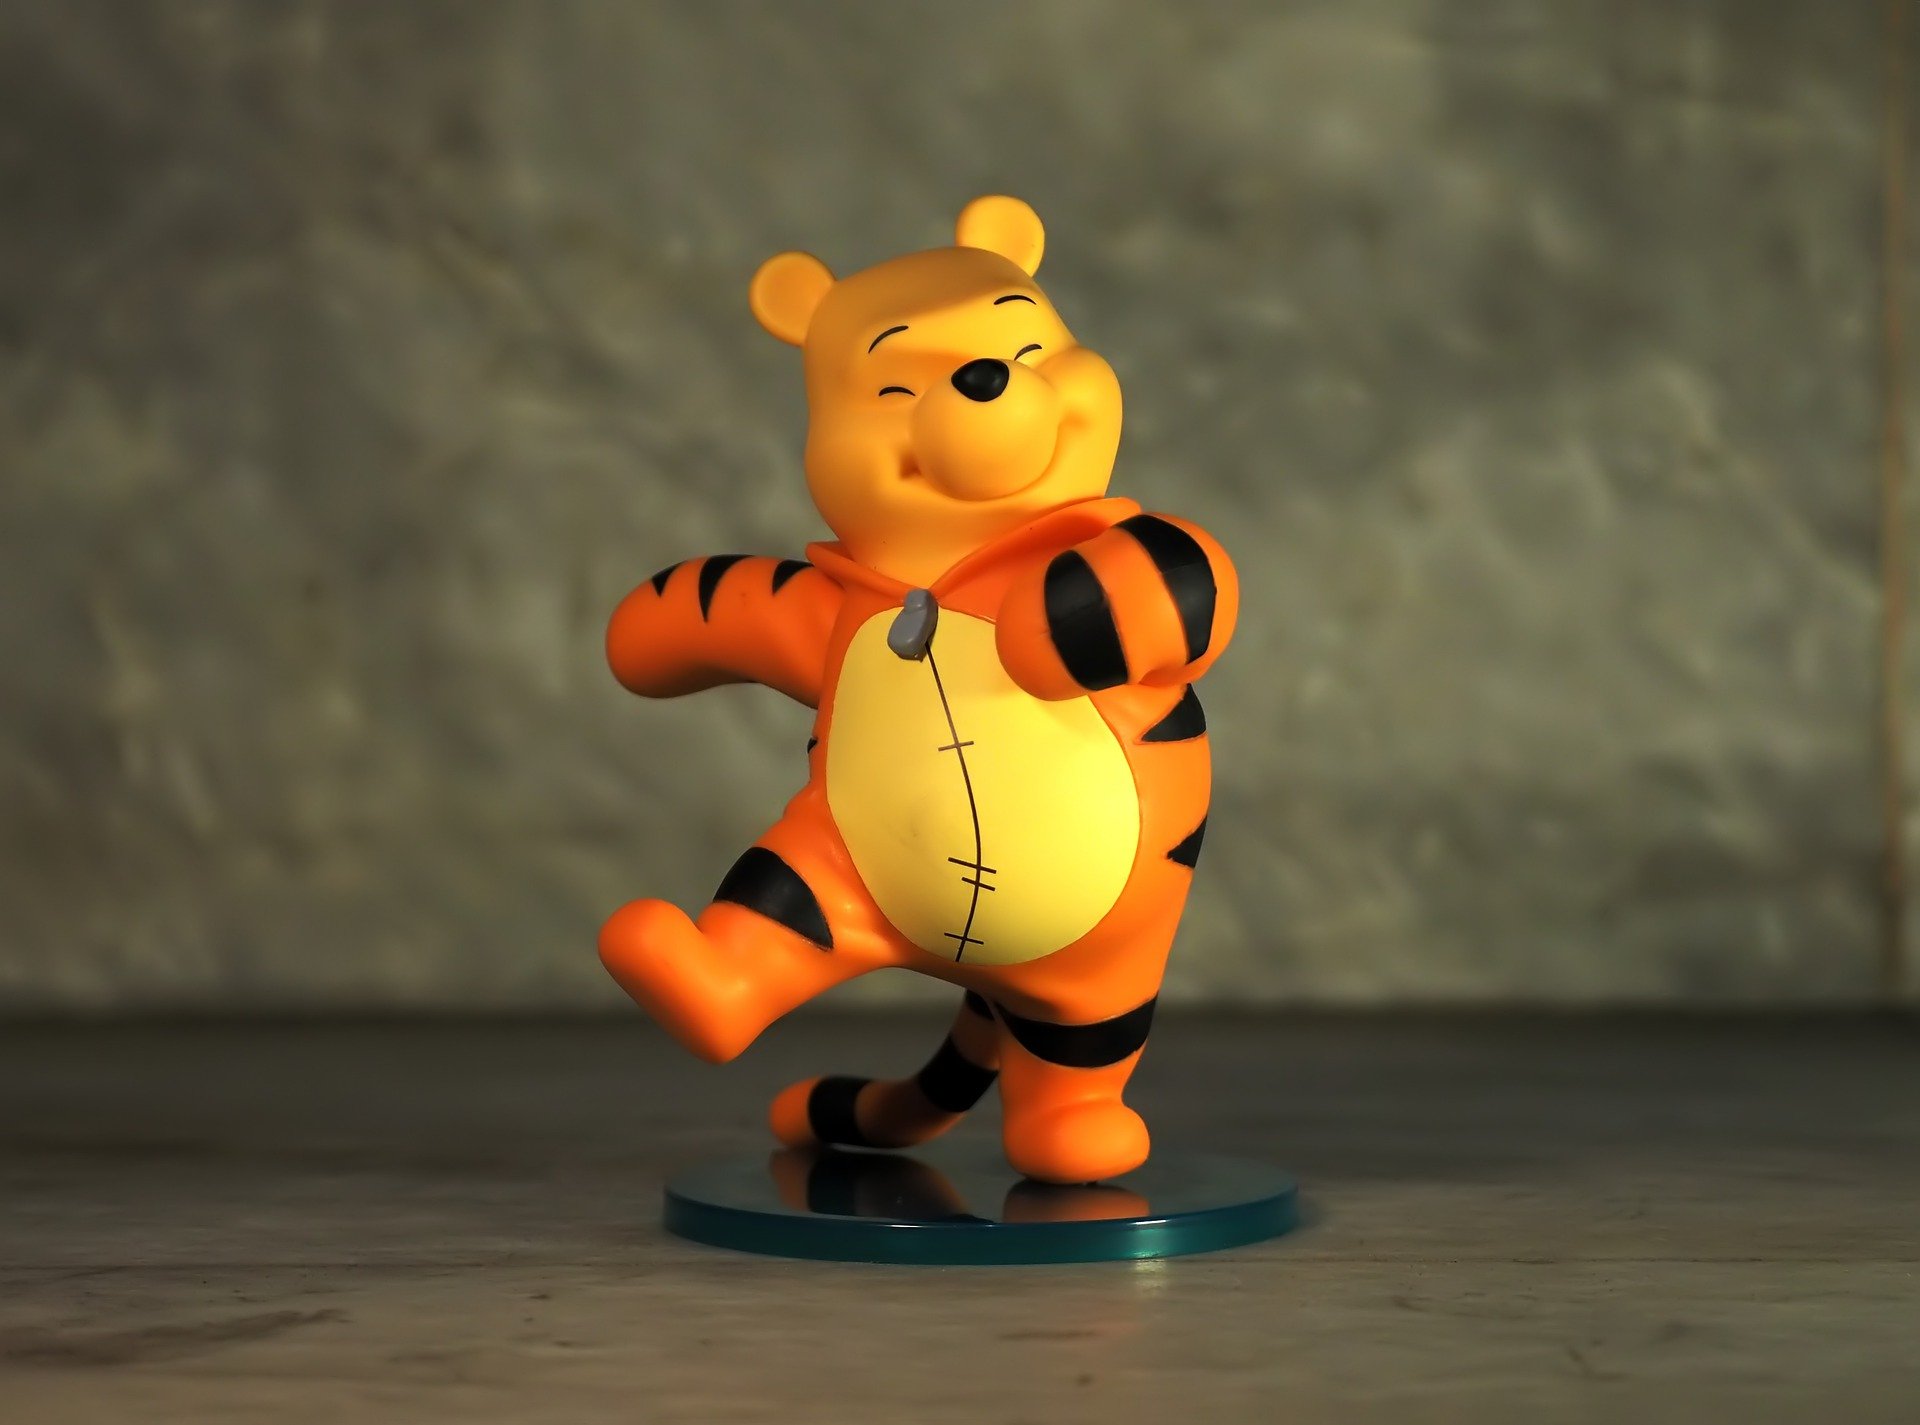 Winnie the Pooh Figurine dancing